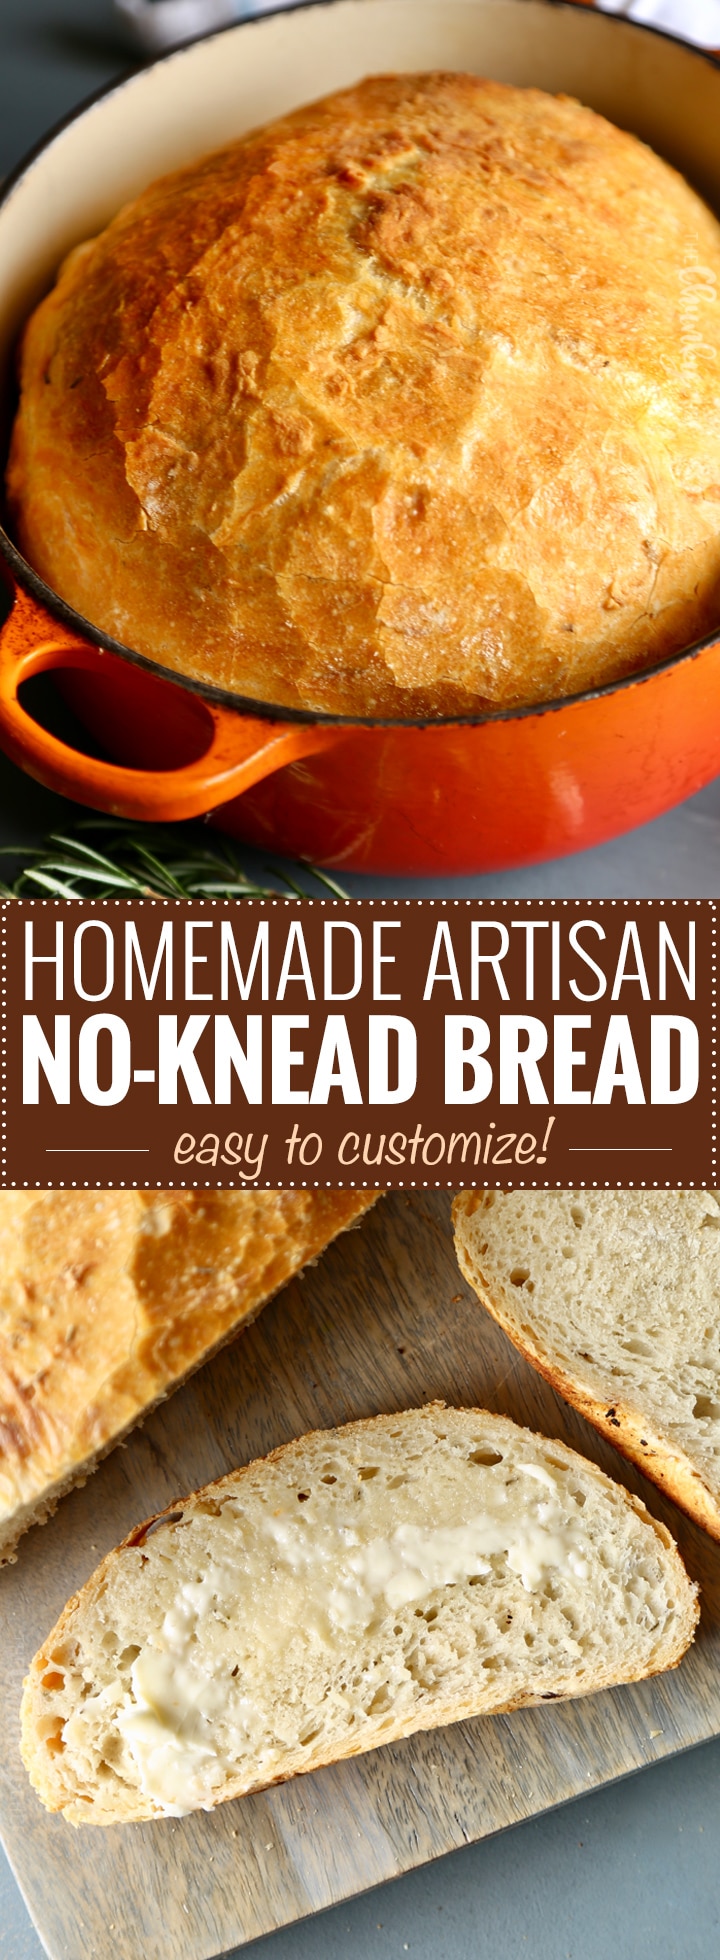 https://www.thechunkychef.com/wp-content/uploads/2017/08/Homemade-Artisan-No-Knead-Bread.jpg